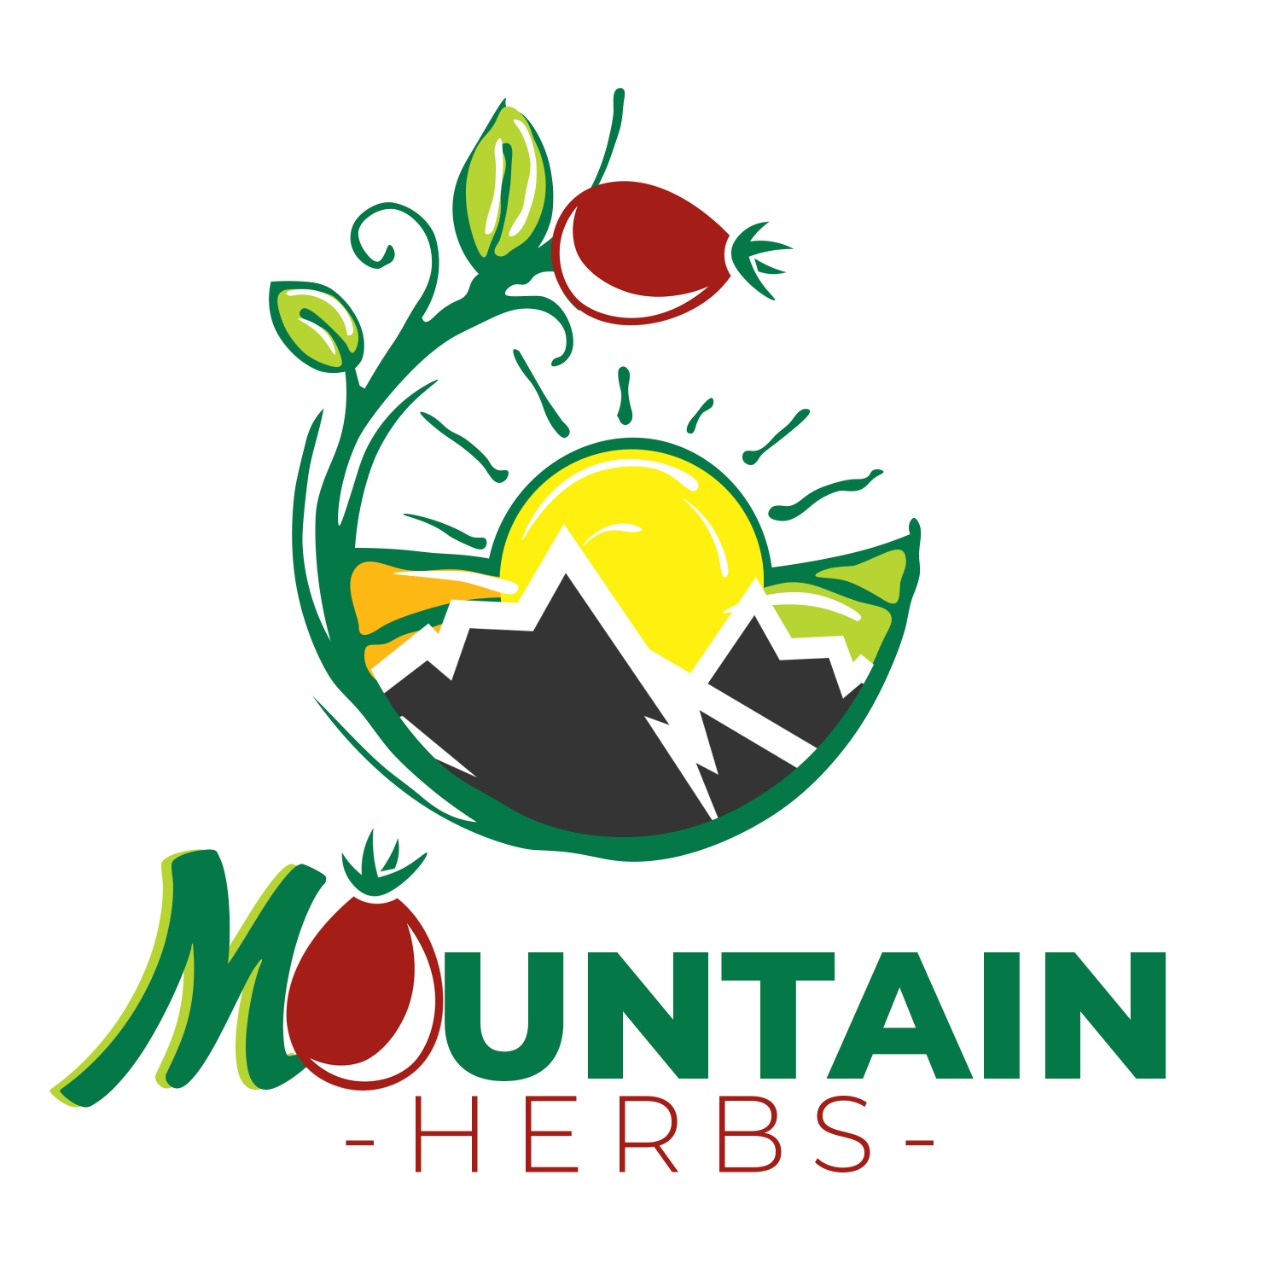 Mountain Herbs